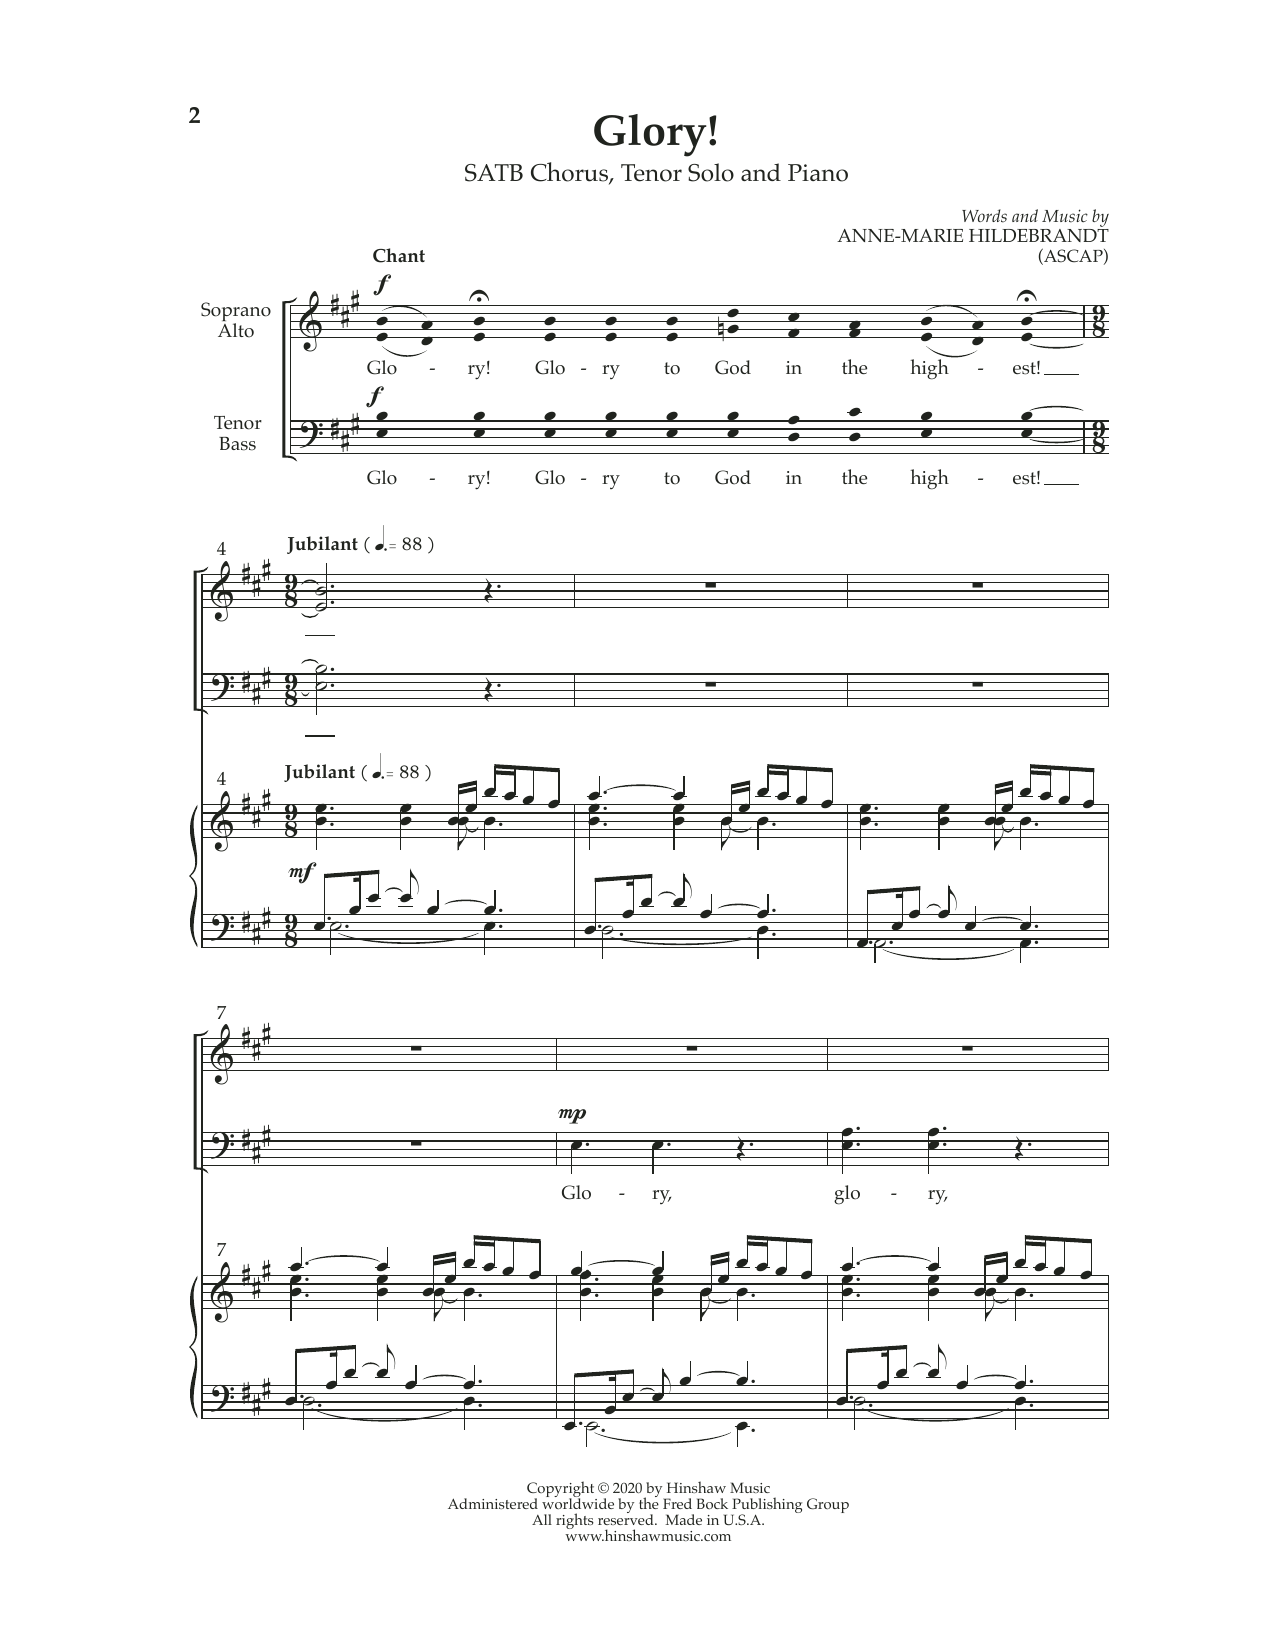 Anne-Marie Hildebrandt Glory! Sheet Music Notes & Chords for SATB Choir - Download or Print PDF